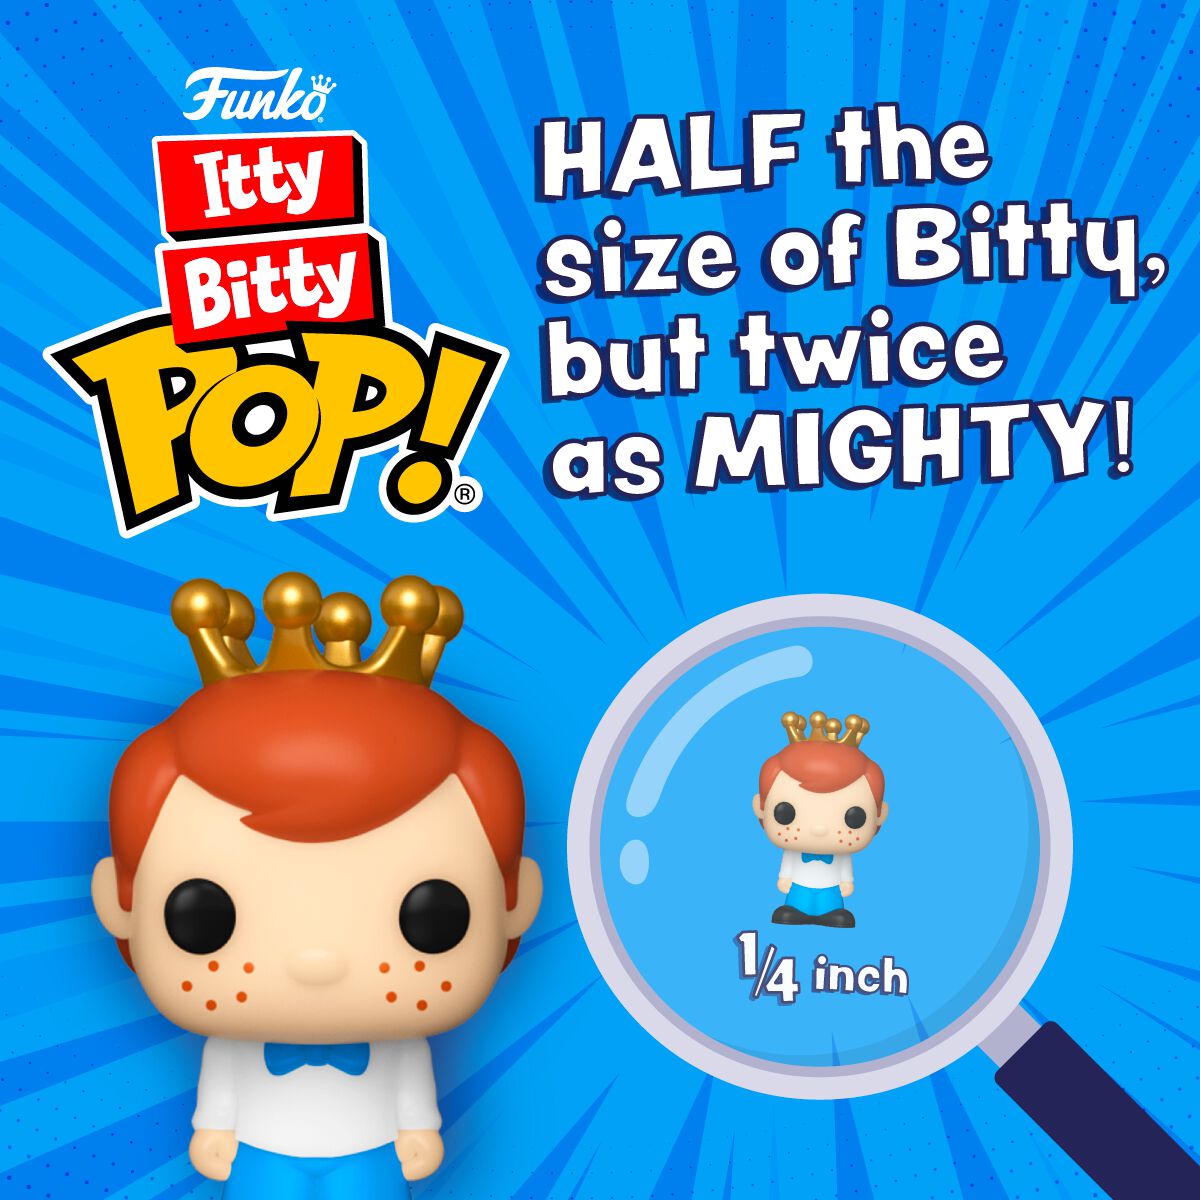 Itty Bitty Pop! Coming Soon